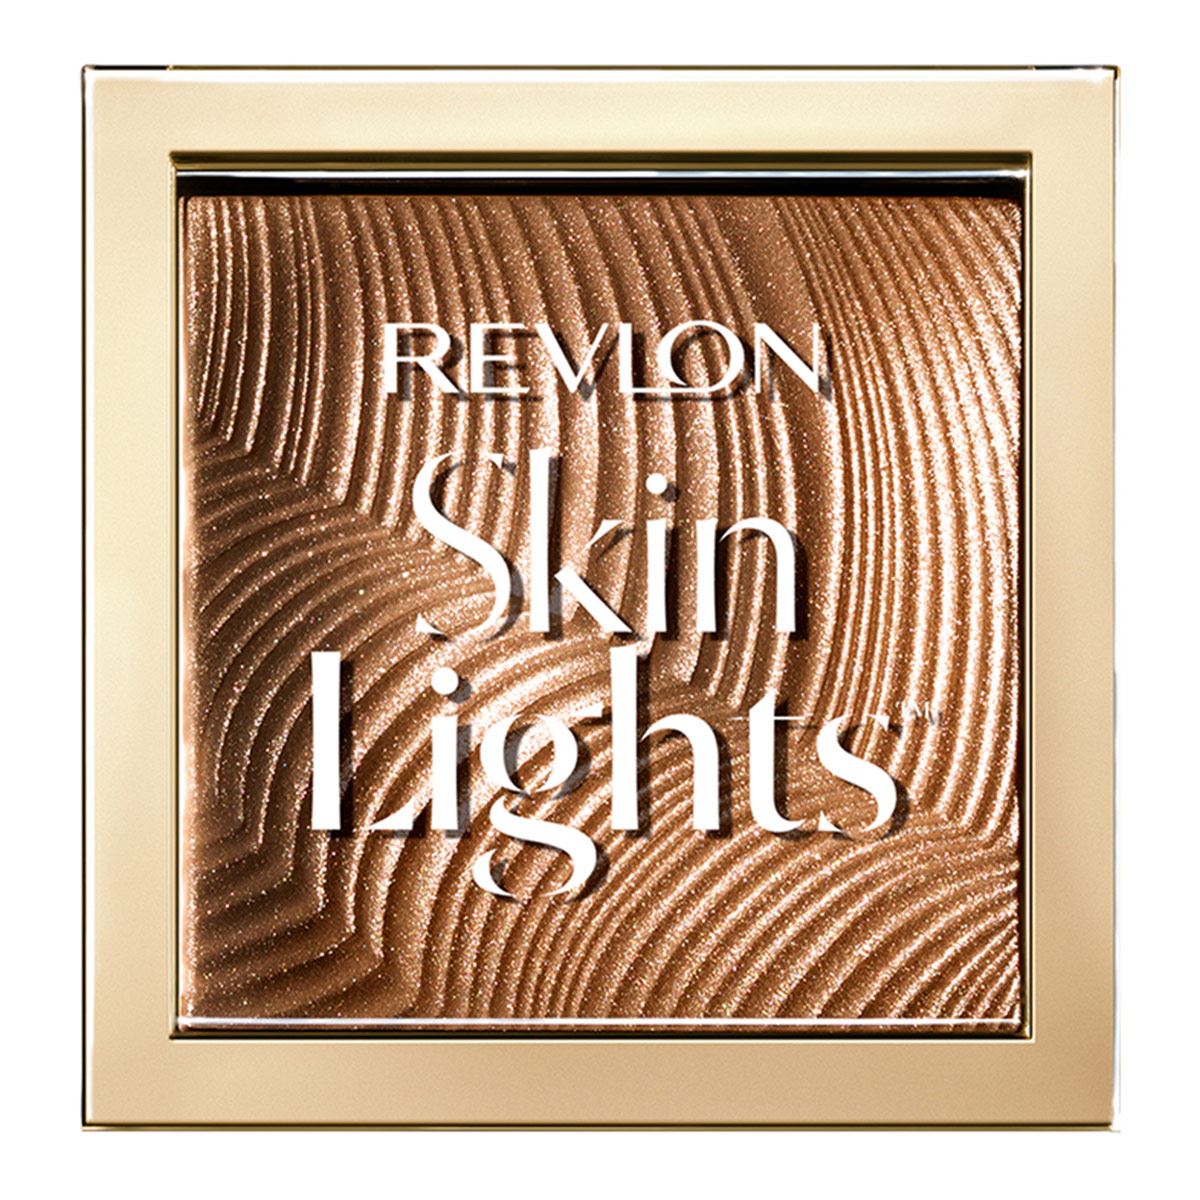 Revlon Skin Lights Prismatic Bronzer 120 Gilded Glimmer